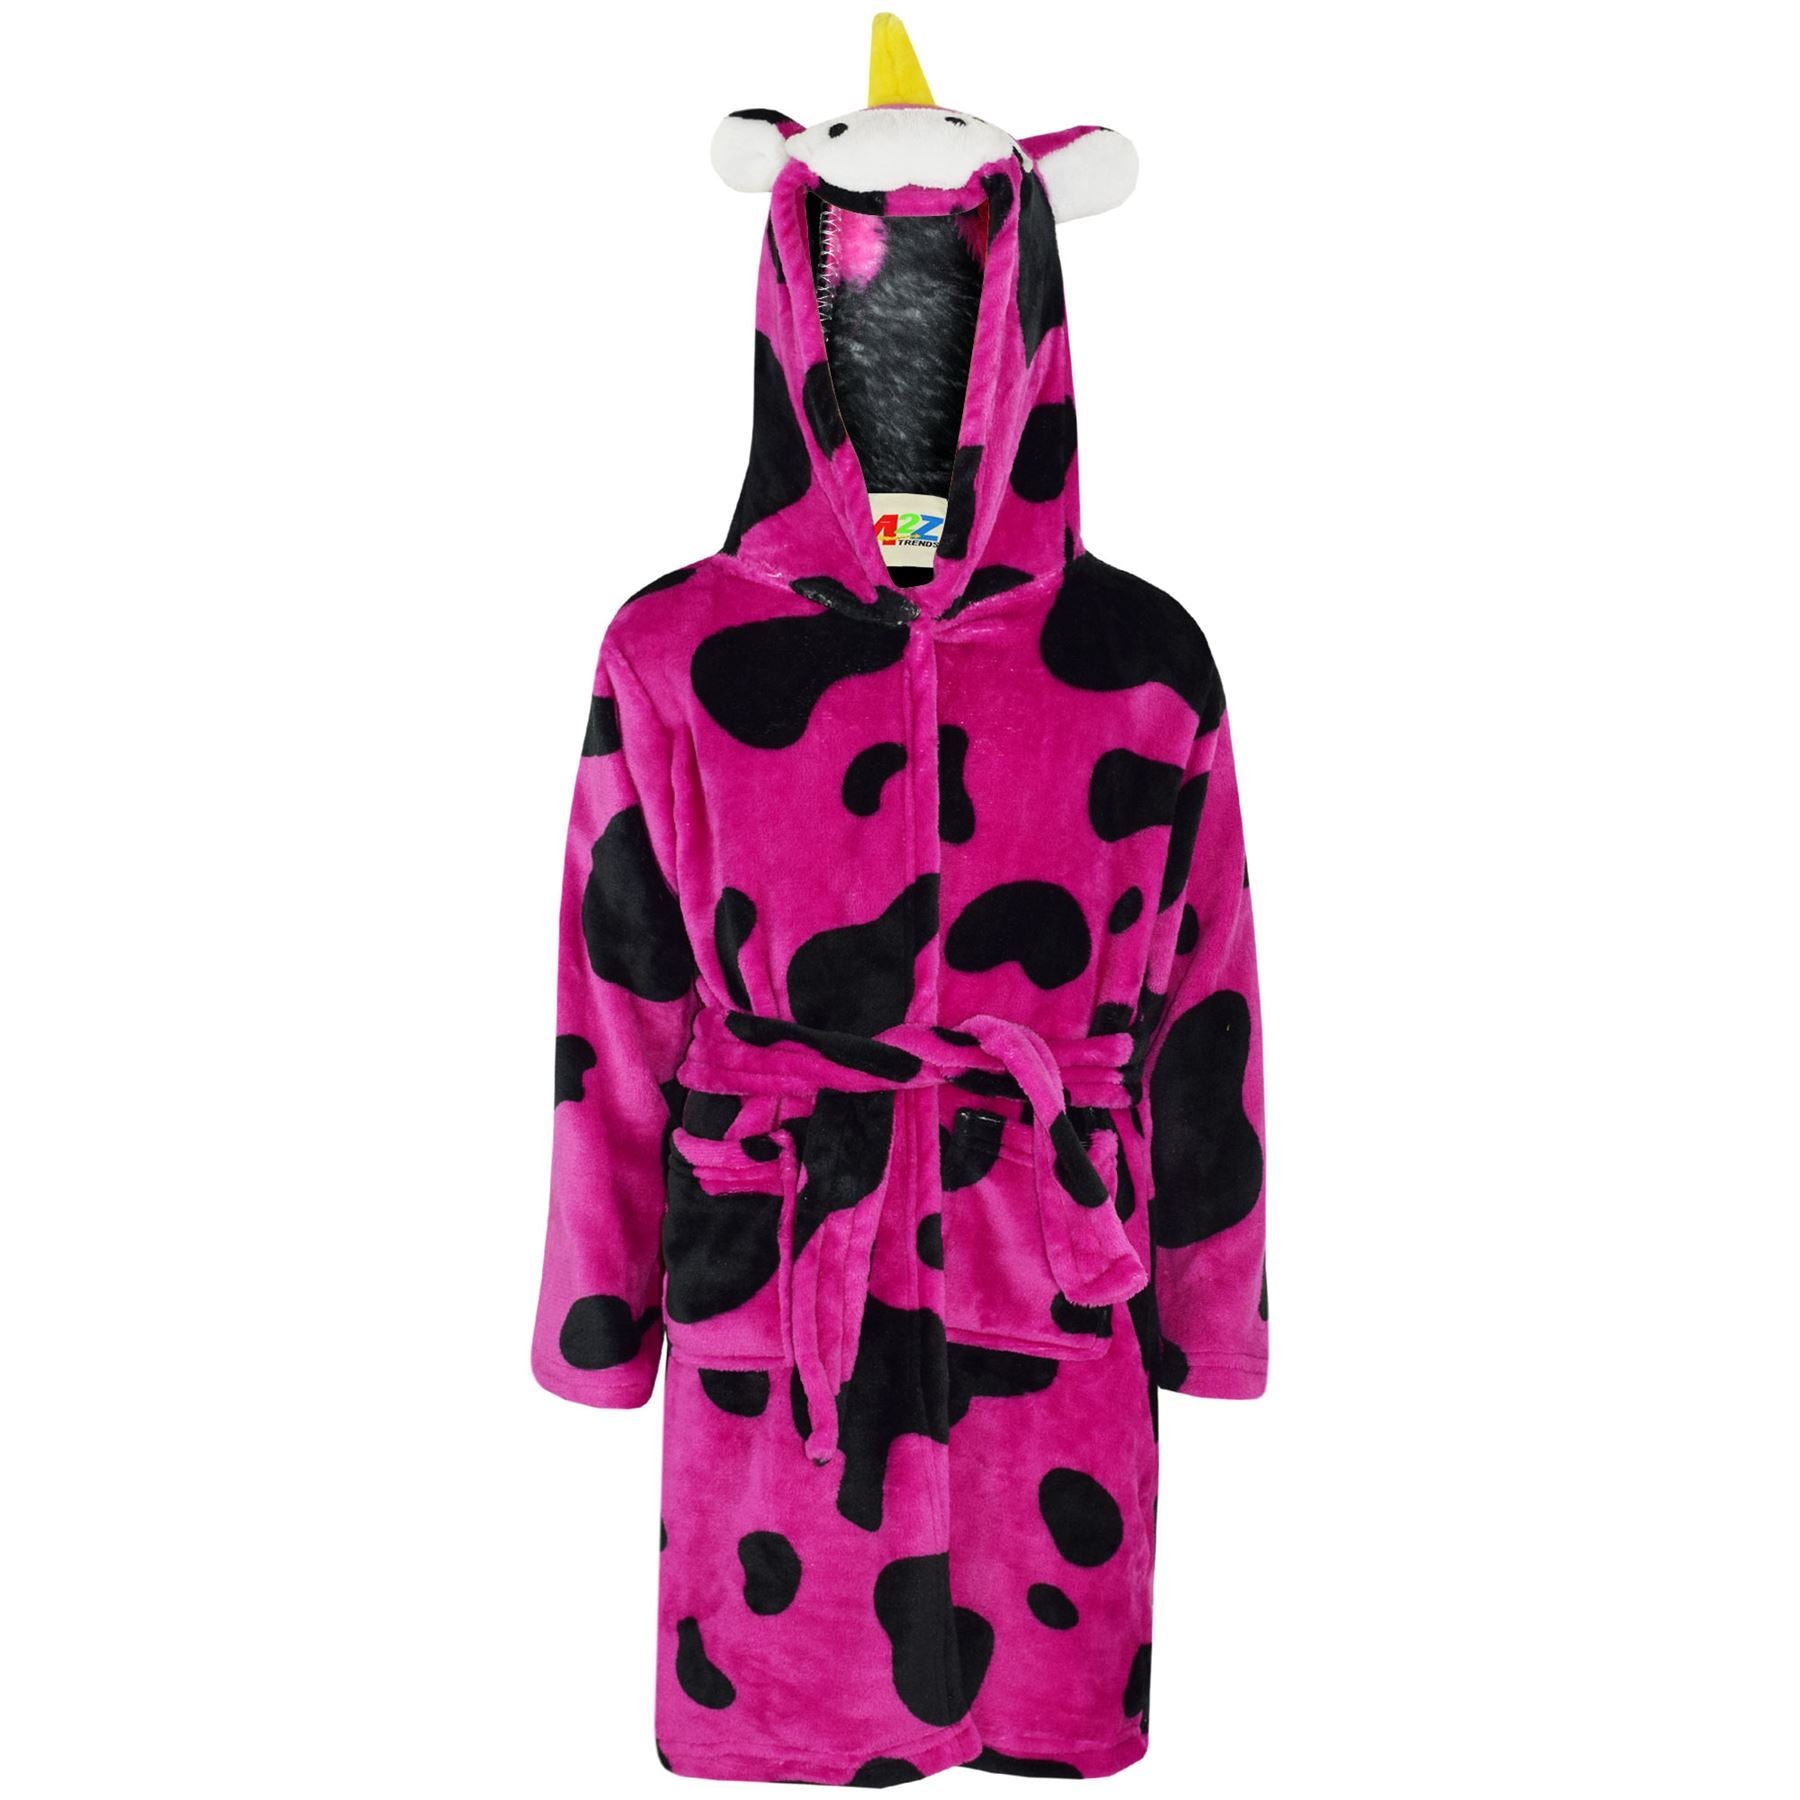 Kids Girls Boys Super Soft 3D Pink Cow Animal Hooded Bathrobe